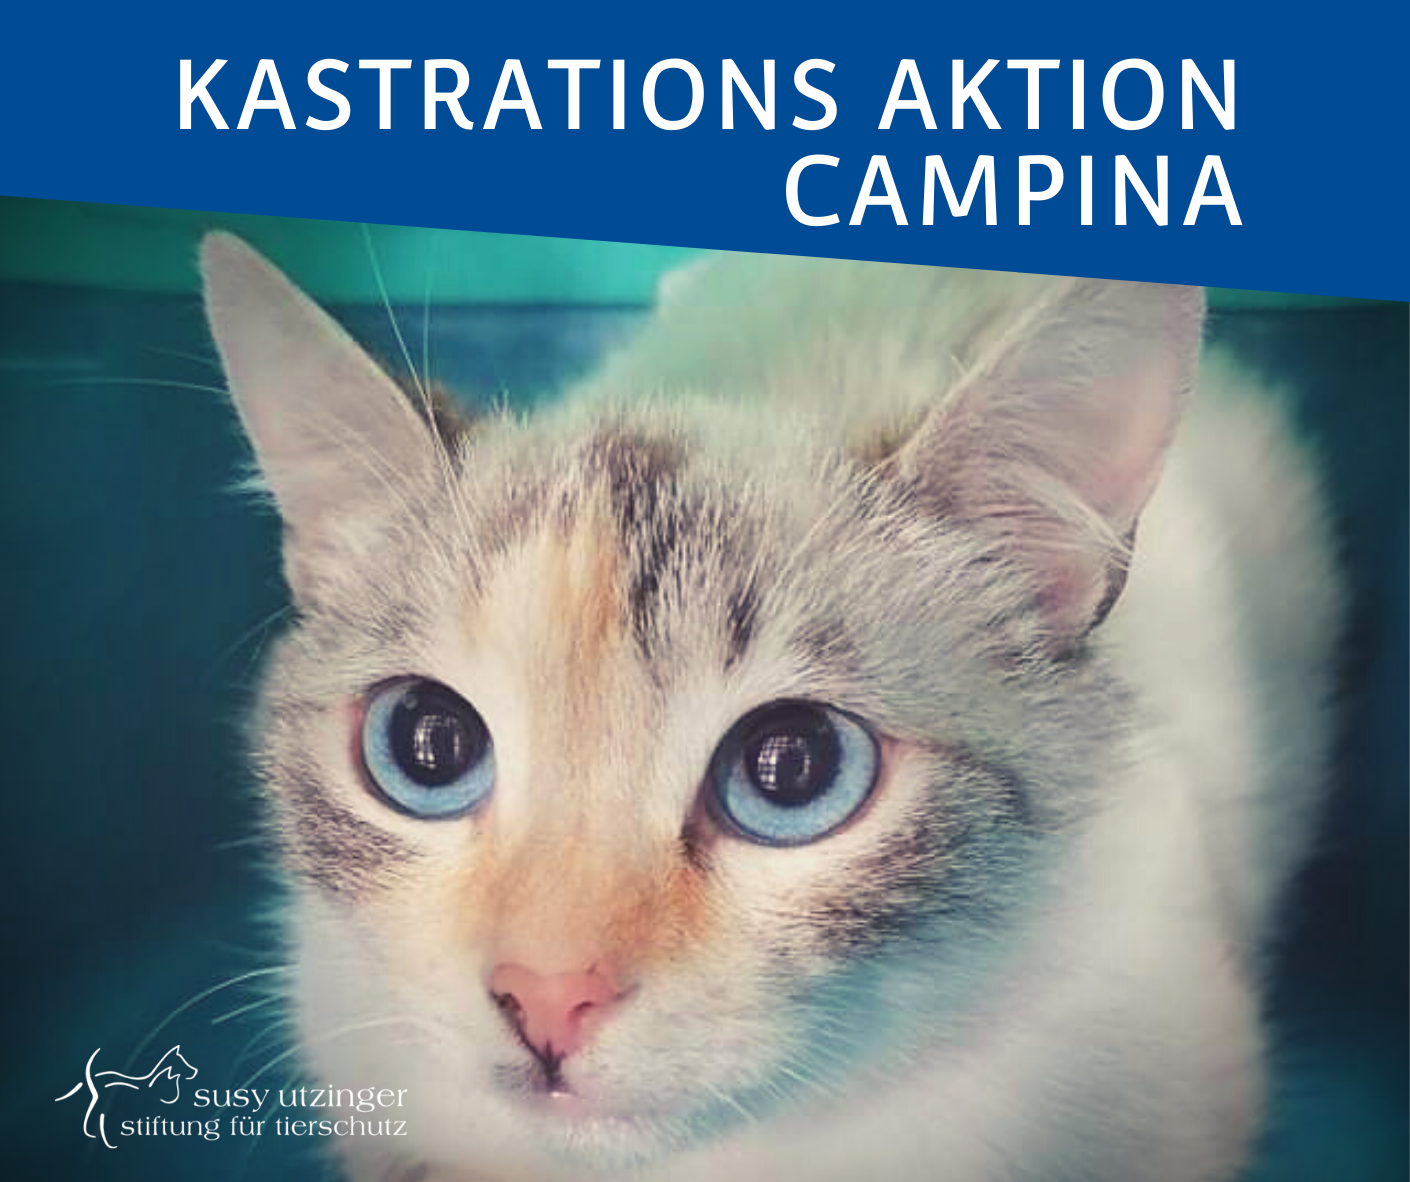 ++ Kampagnen-Report von unserer Kastrations-Aktion in Campina, Rumänien ++